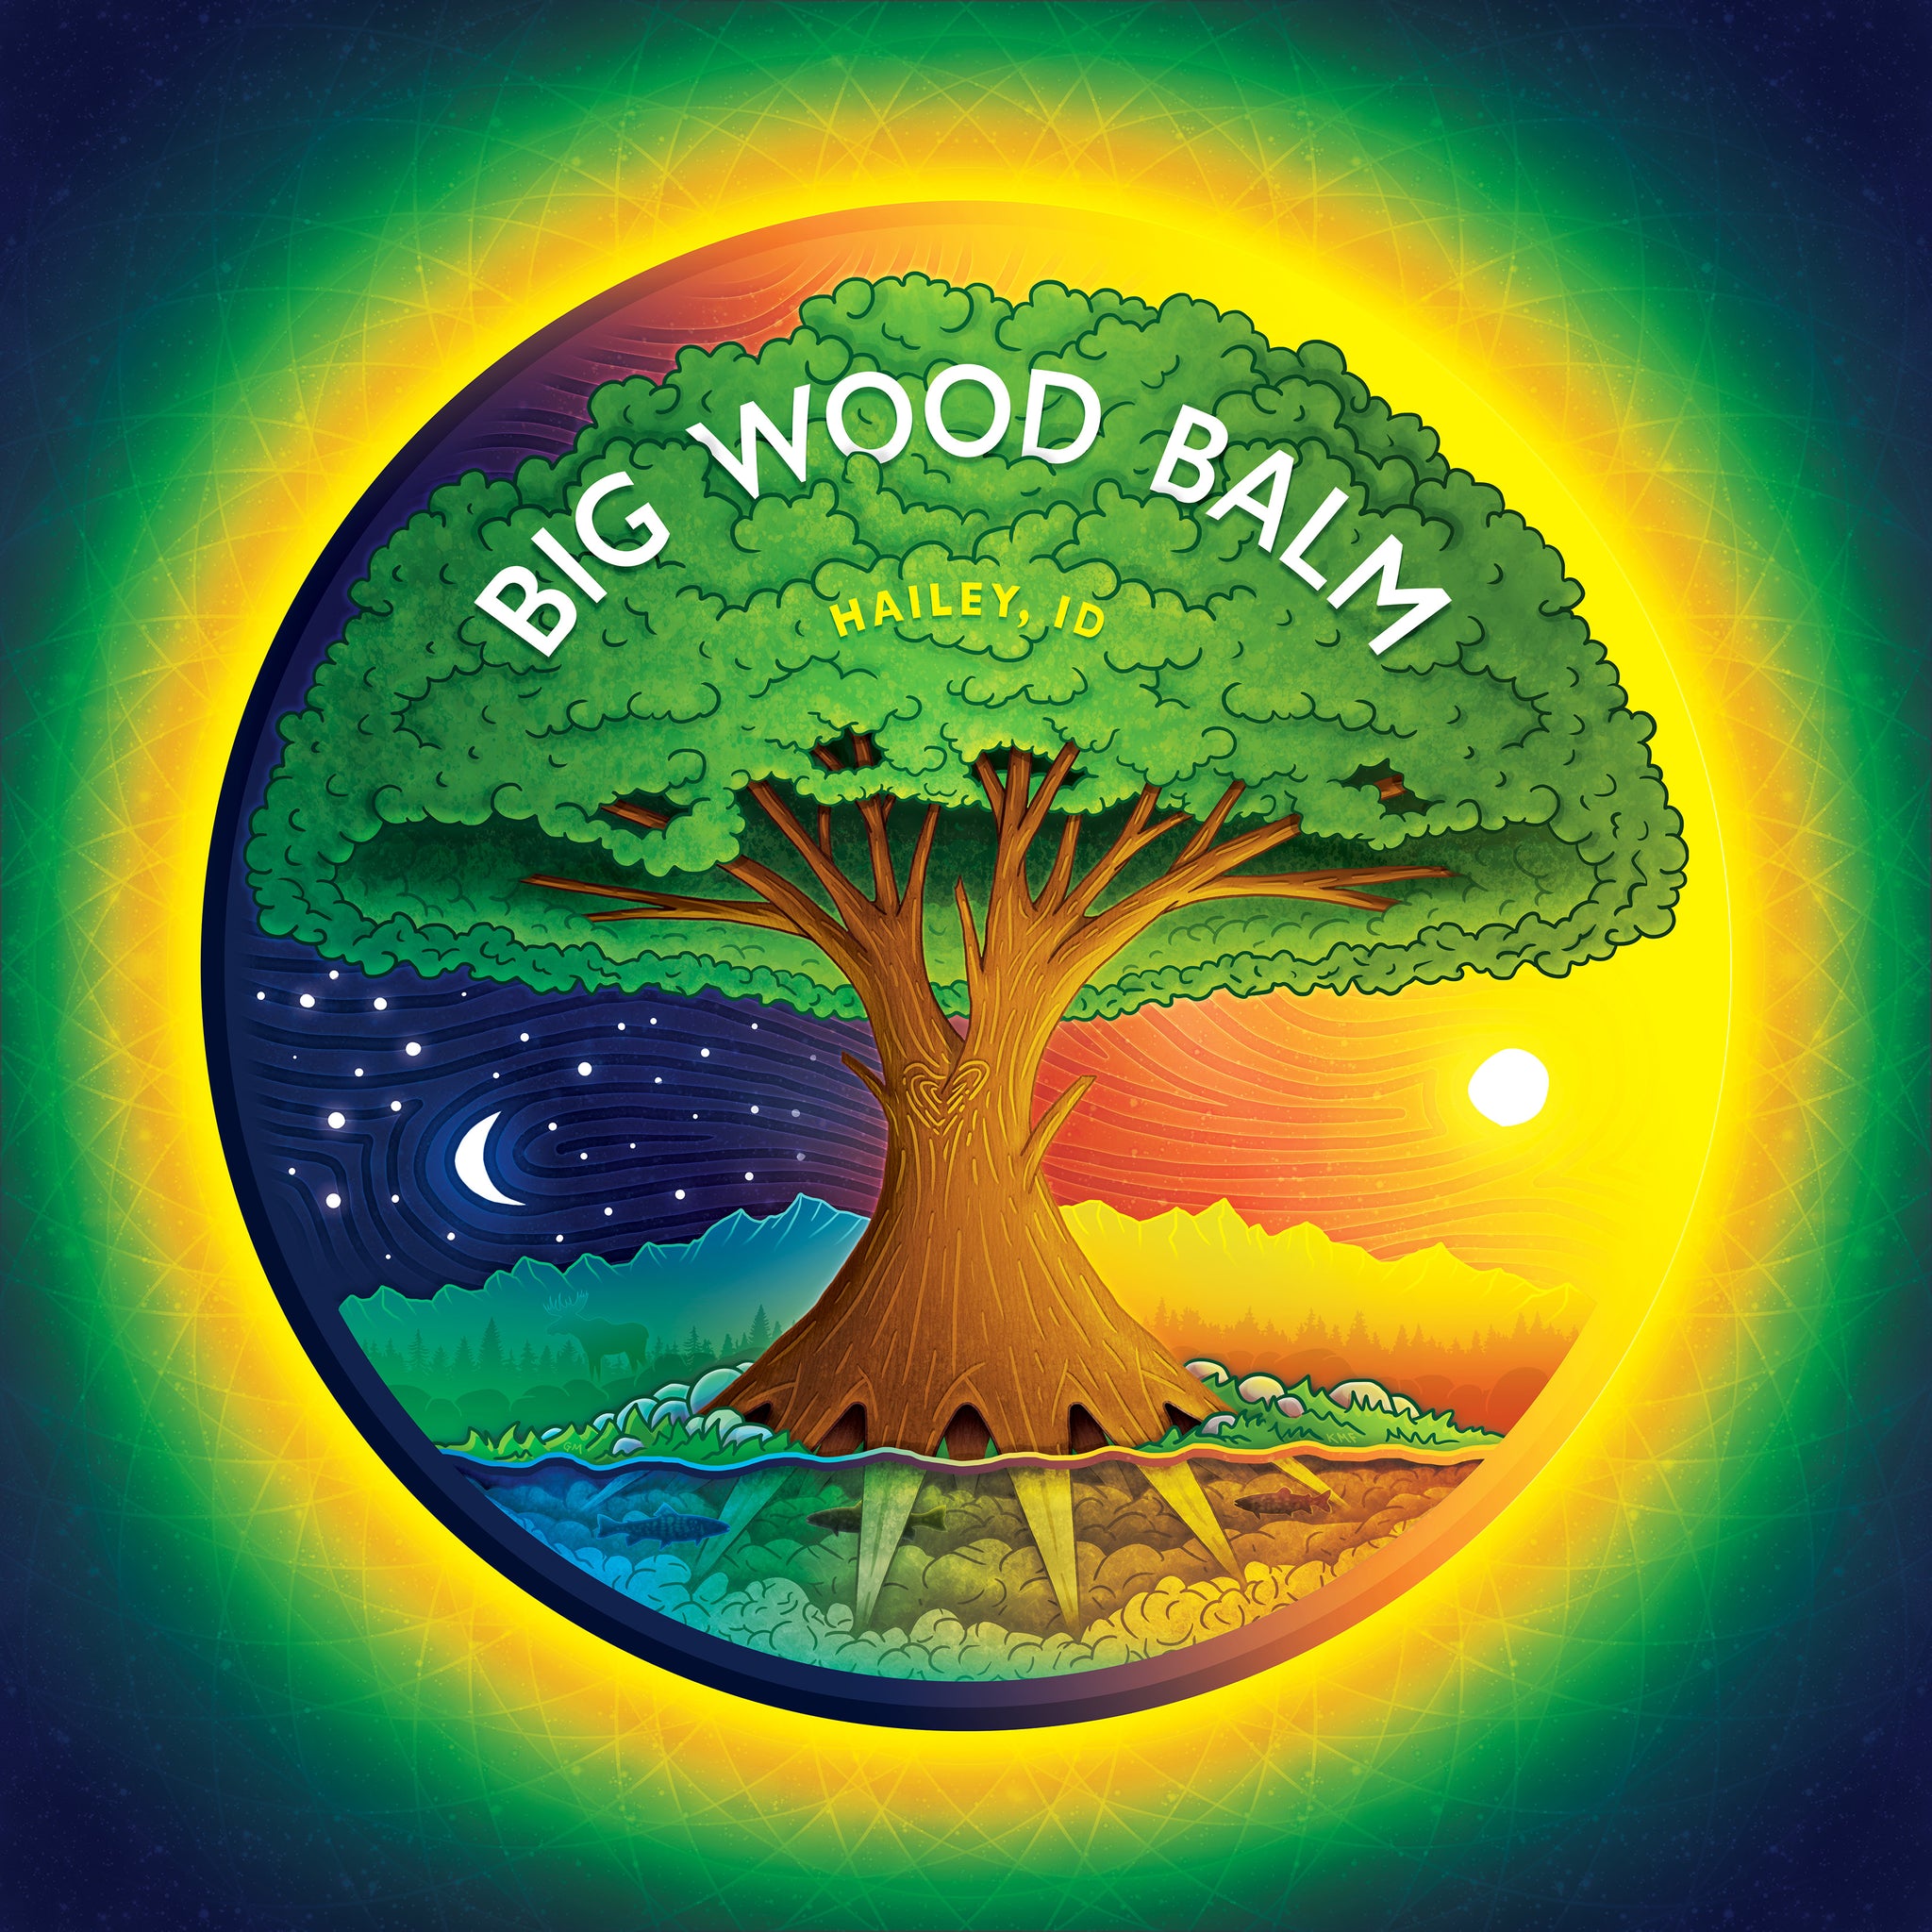 Big Wood Balm - Tree of Life Label Art